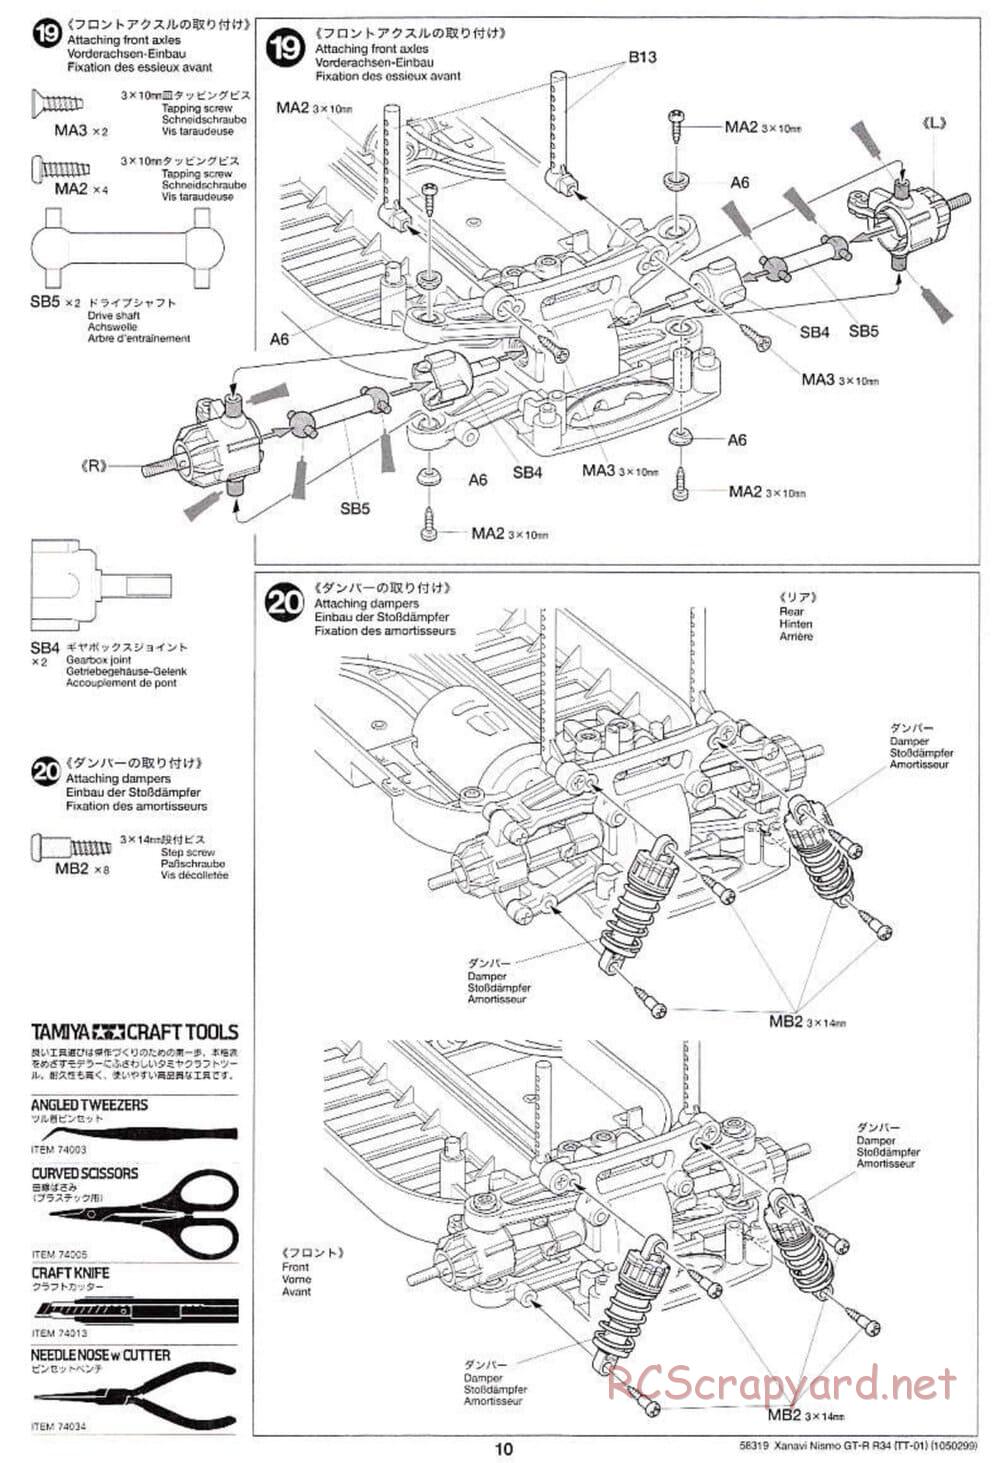 Tamiya - Xanavi Nismo GT-R R34 - TT-01 Chassis - Manual - Page 10